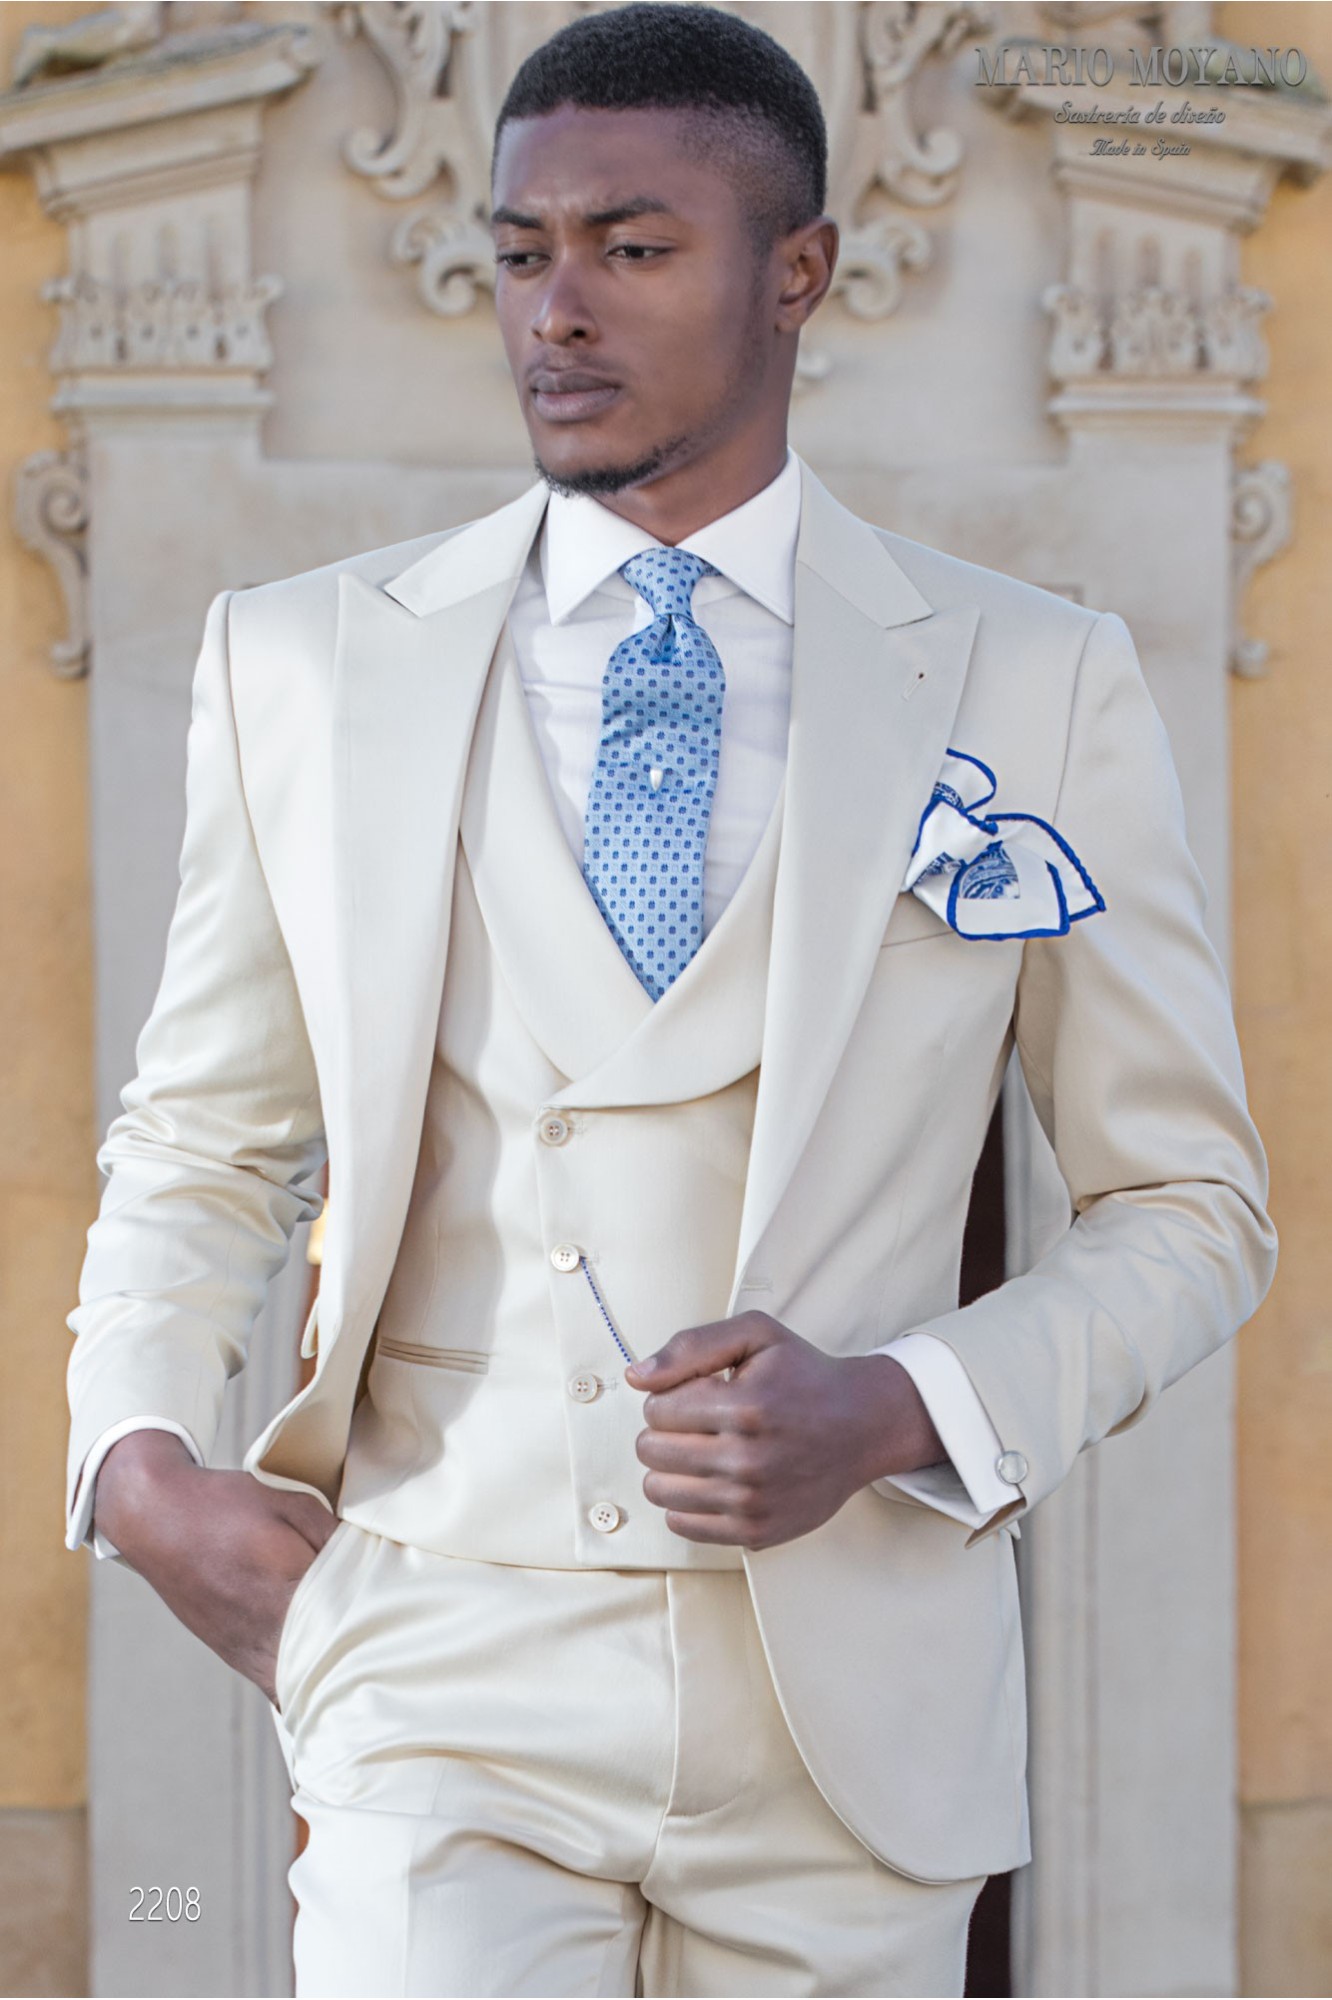 Costume de mariage en coton beige sur mesure modèle 2208 Mario Moyano